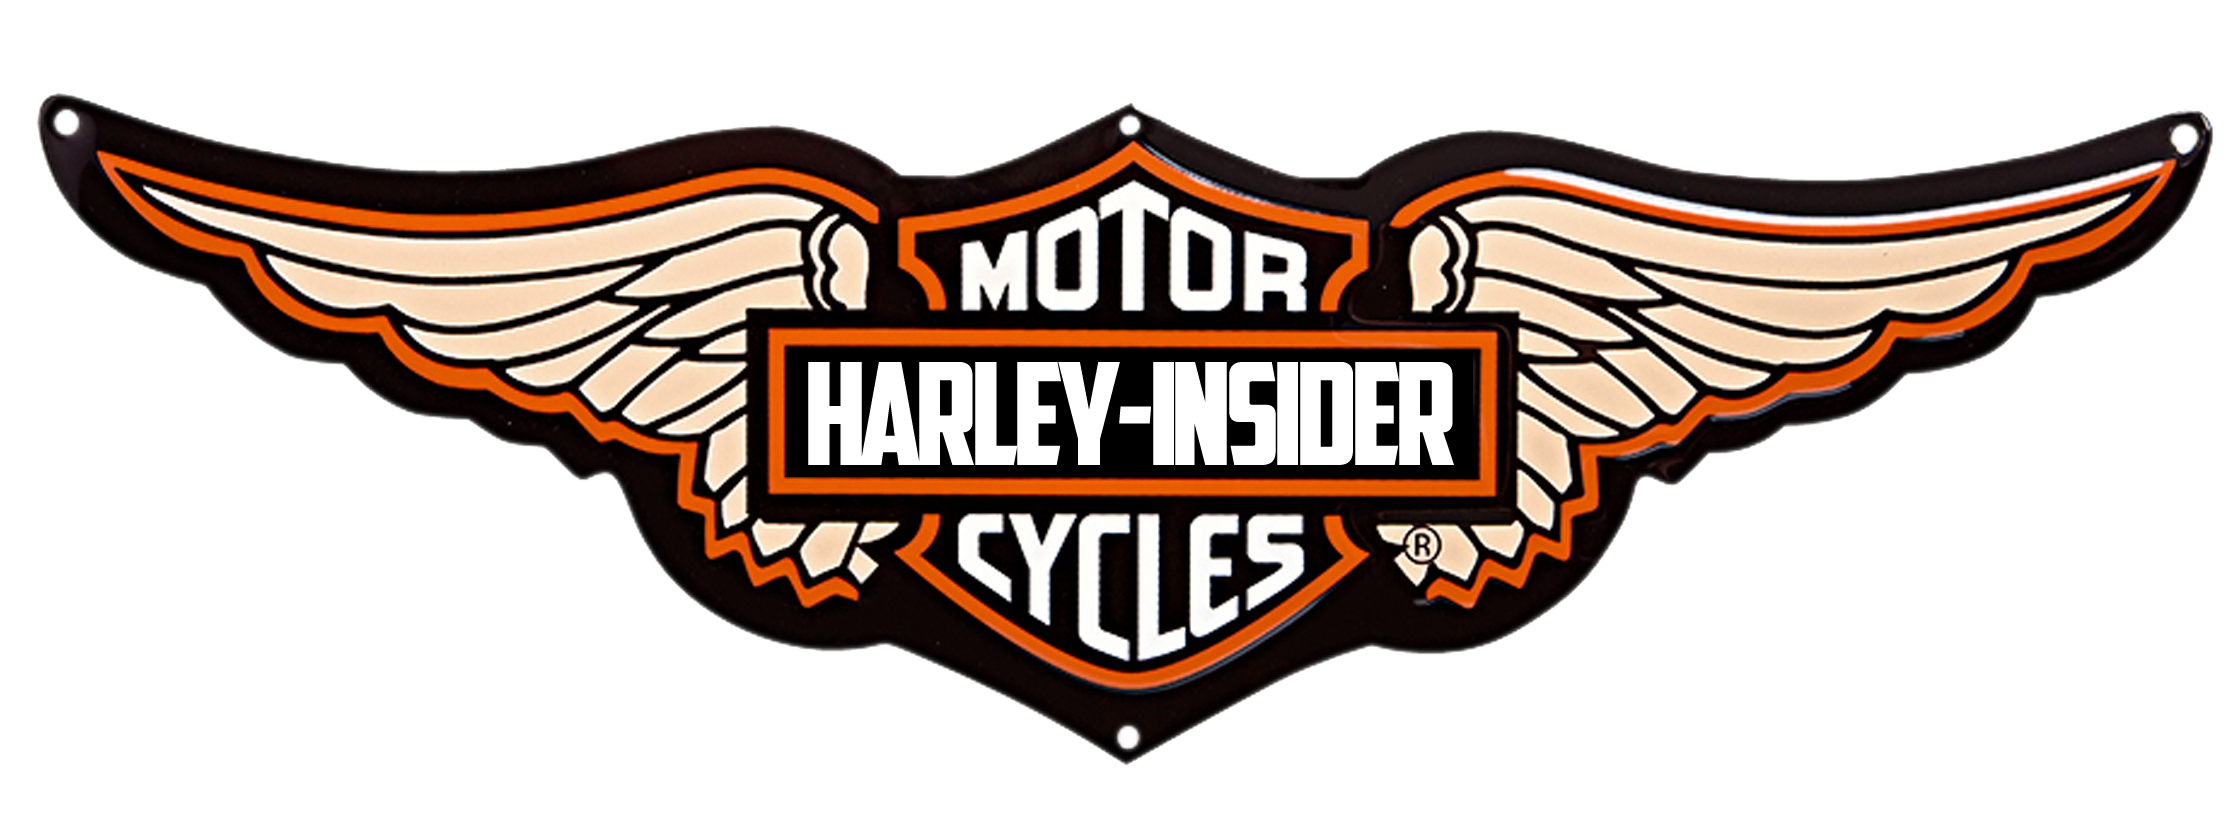 Harley Davidson Logo Wallpapers  Top 20 Best Harley Davidson Logo  Wallpapers  HQ 